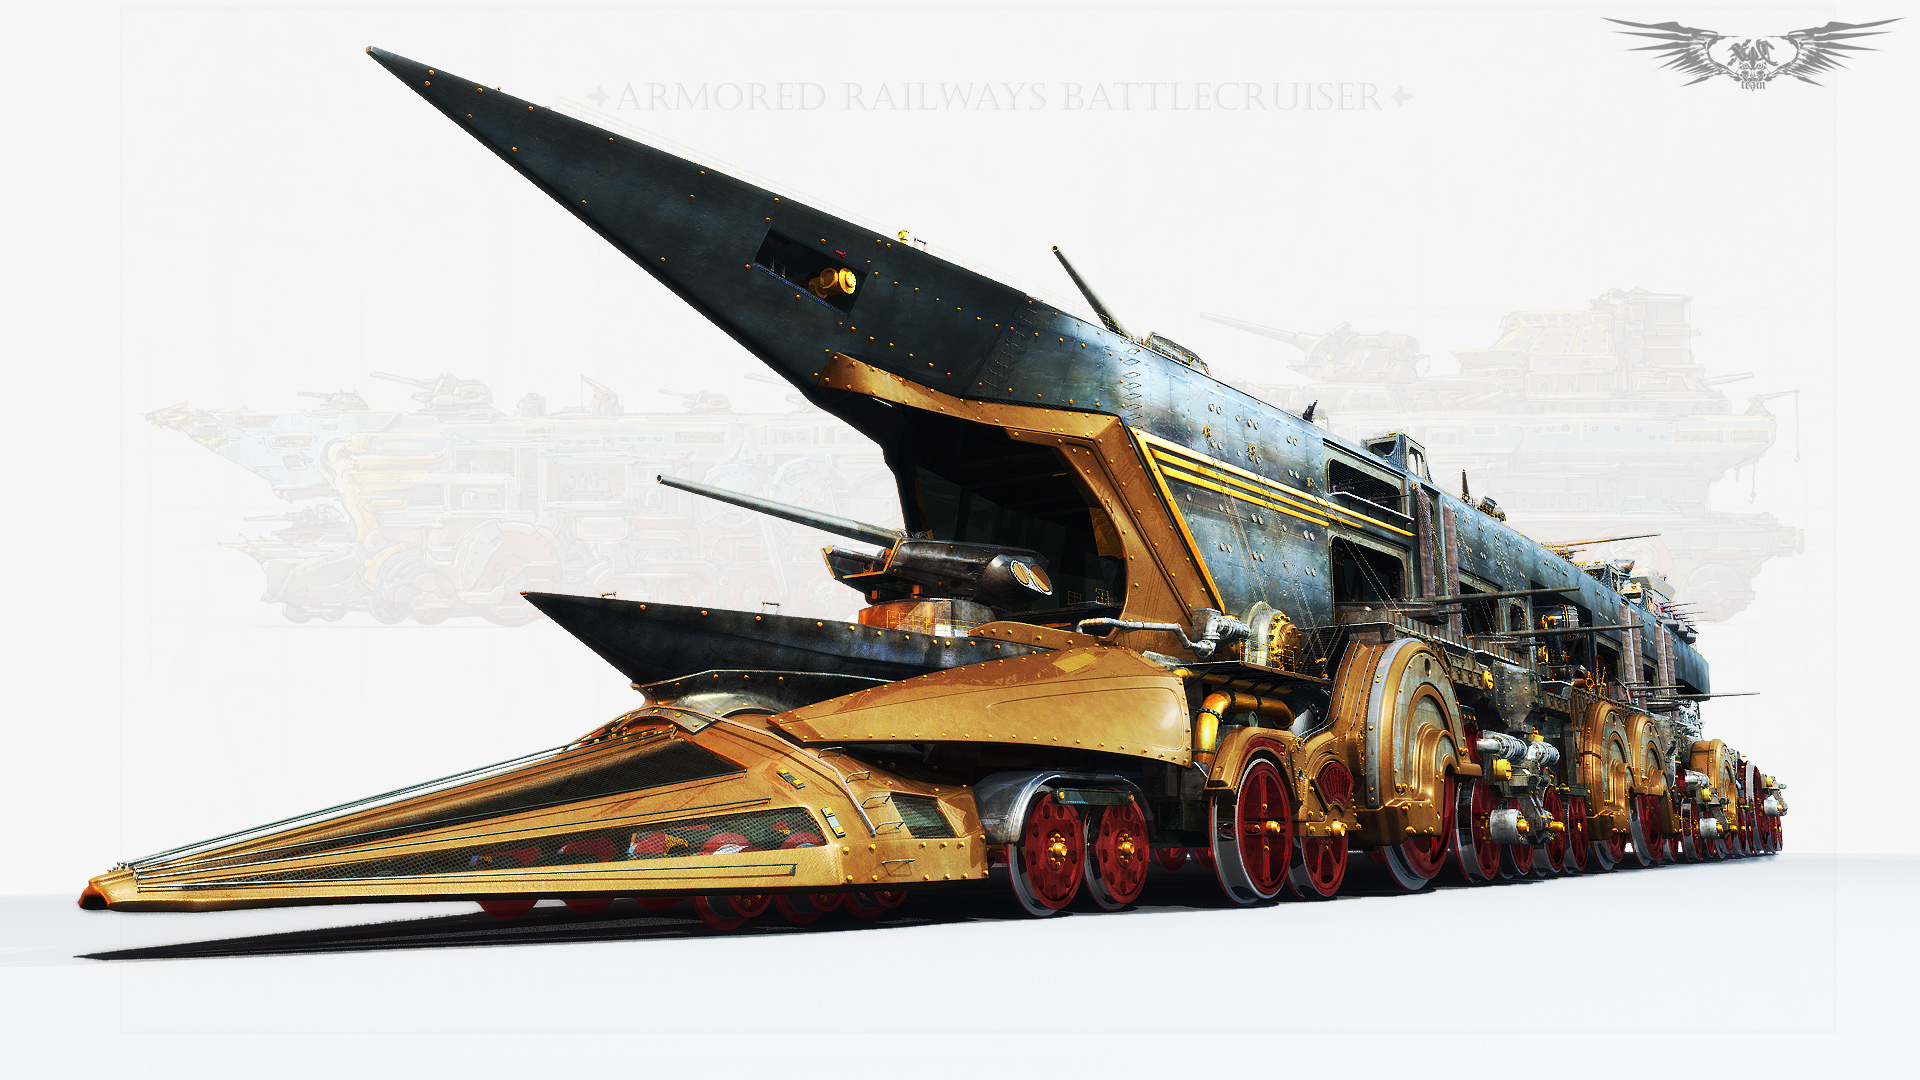 General 1920x1080 digital art artwork futuristic science fiction vehicle train steampunk armor